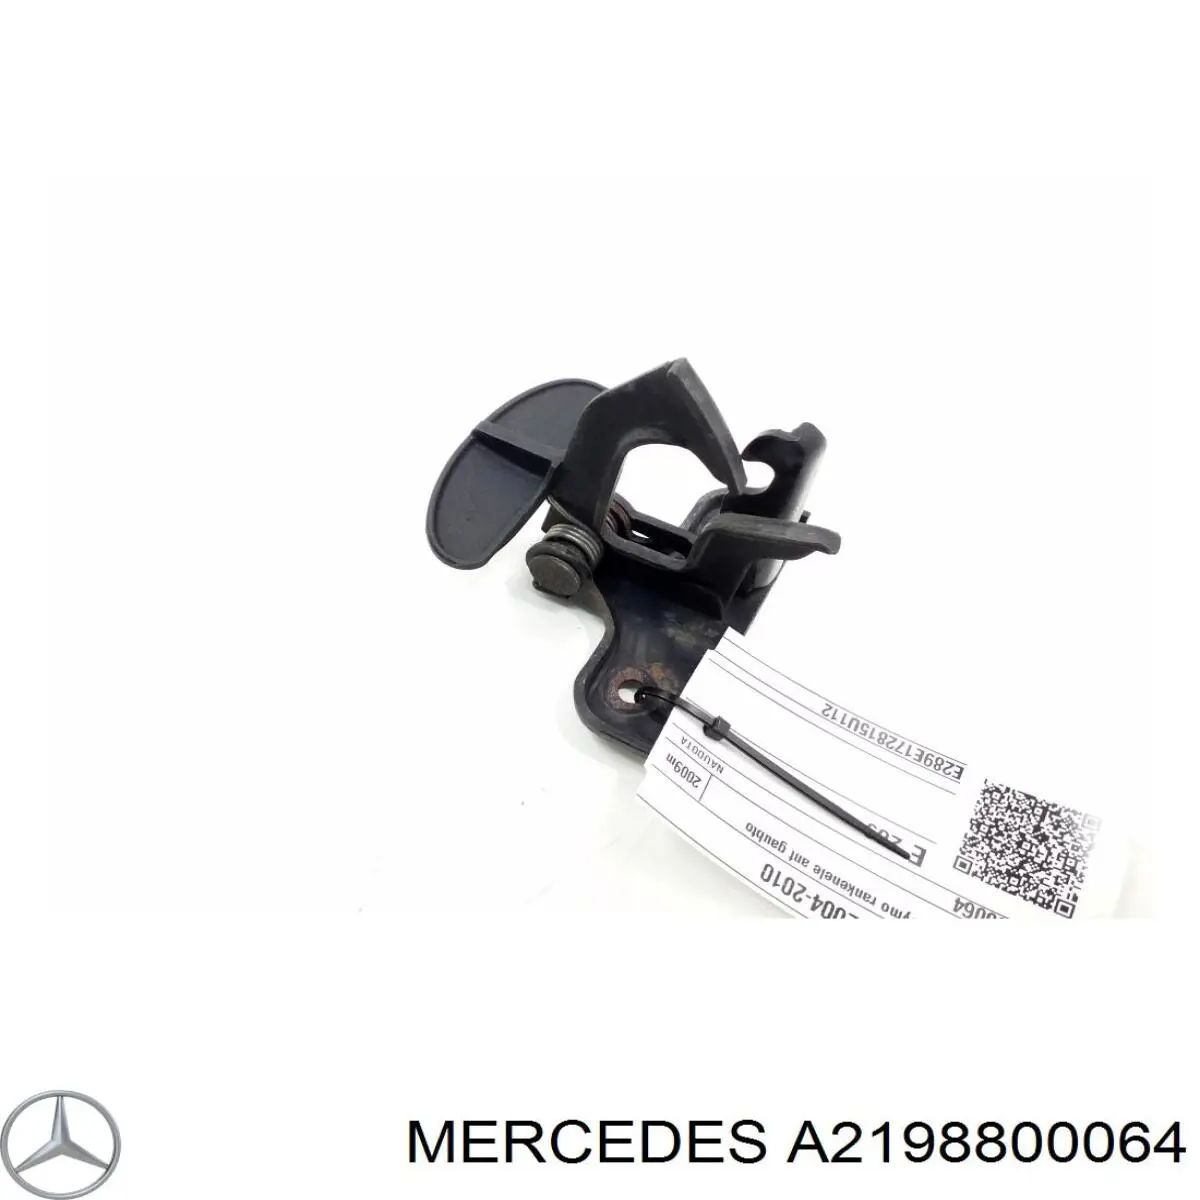 2198800064 Mercedes стояк-крюк замка капота